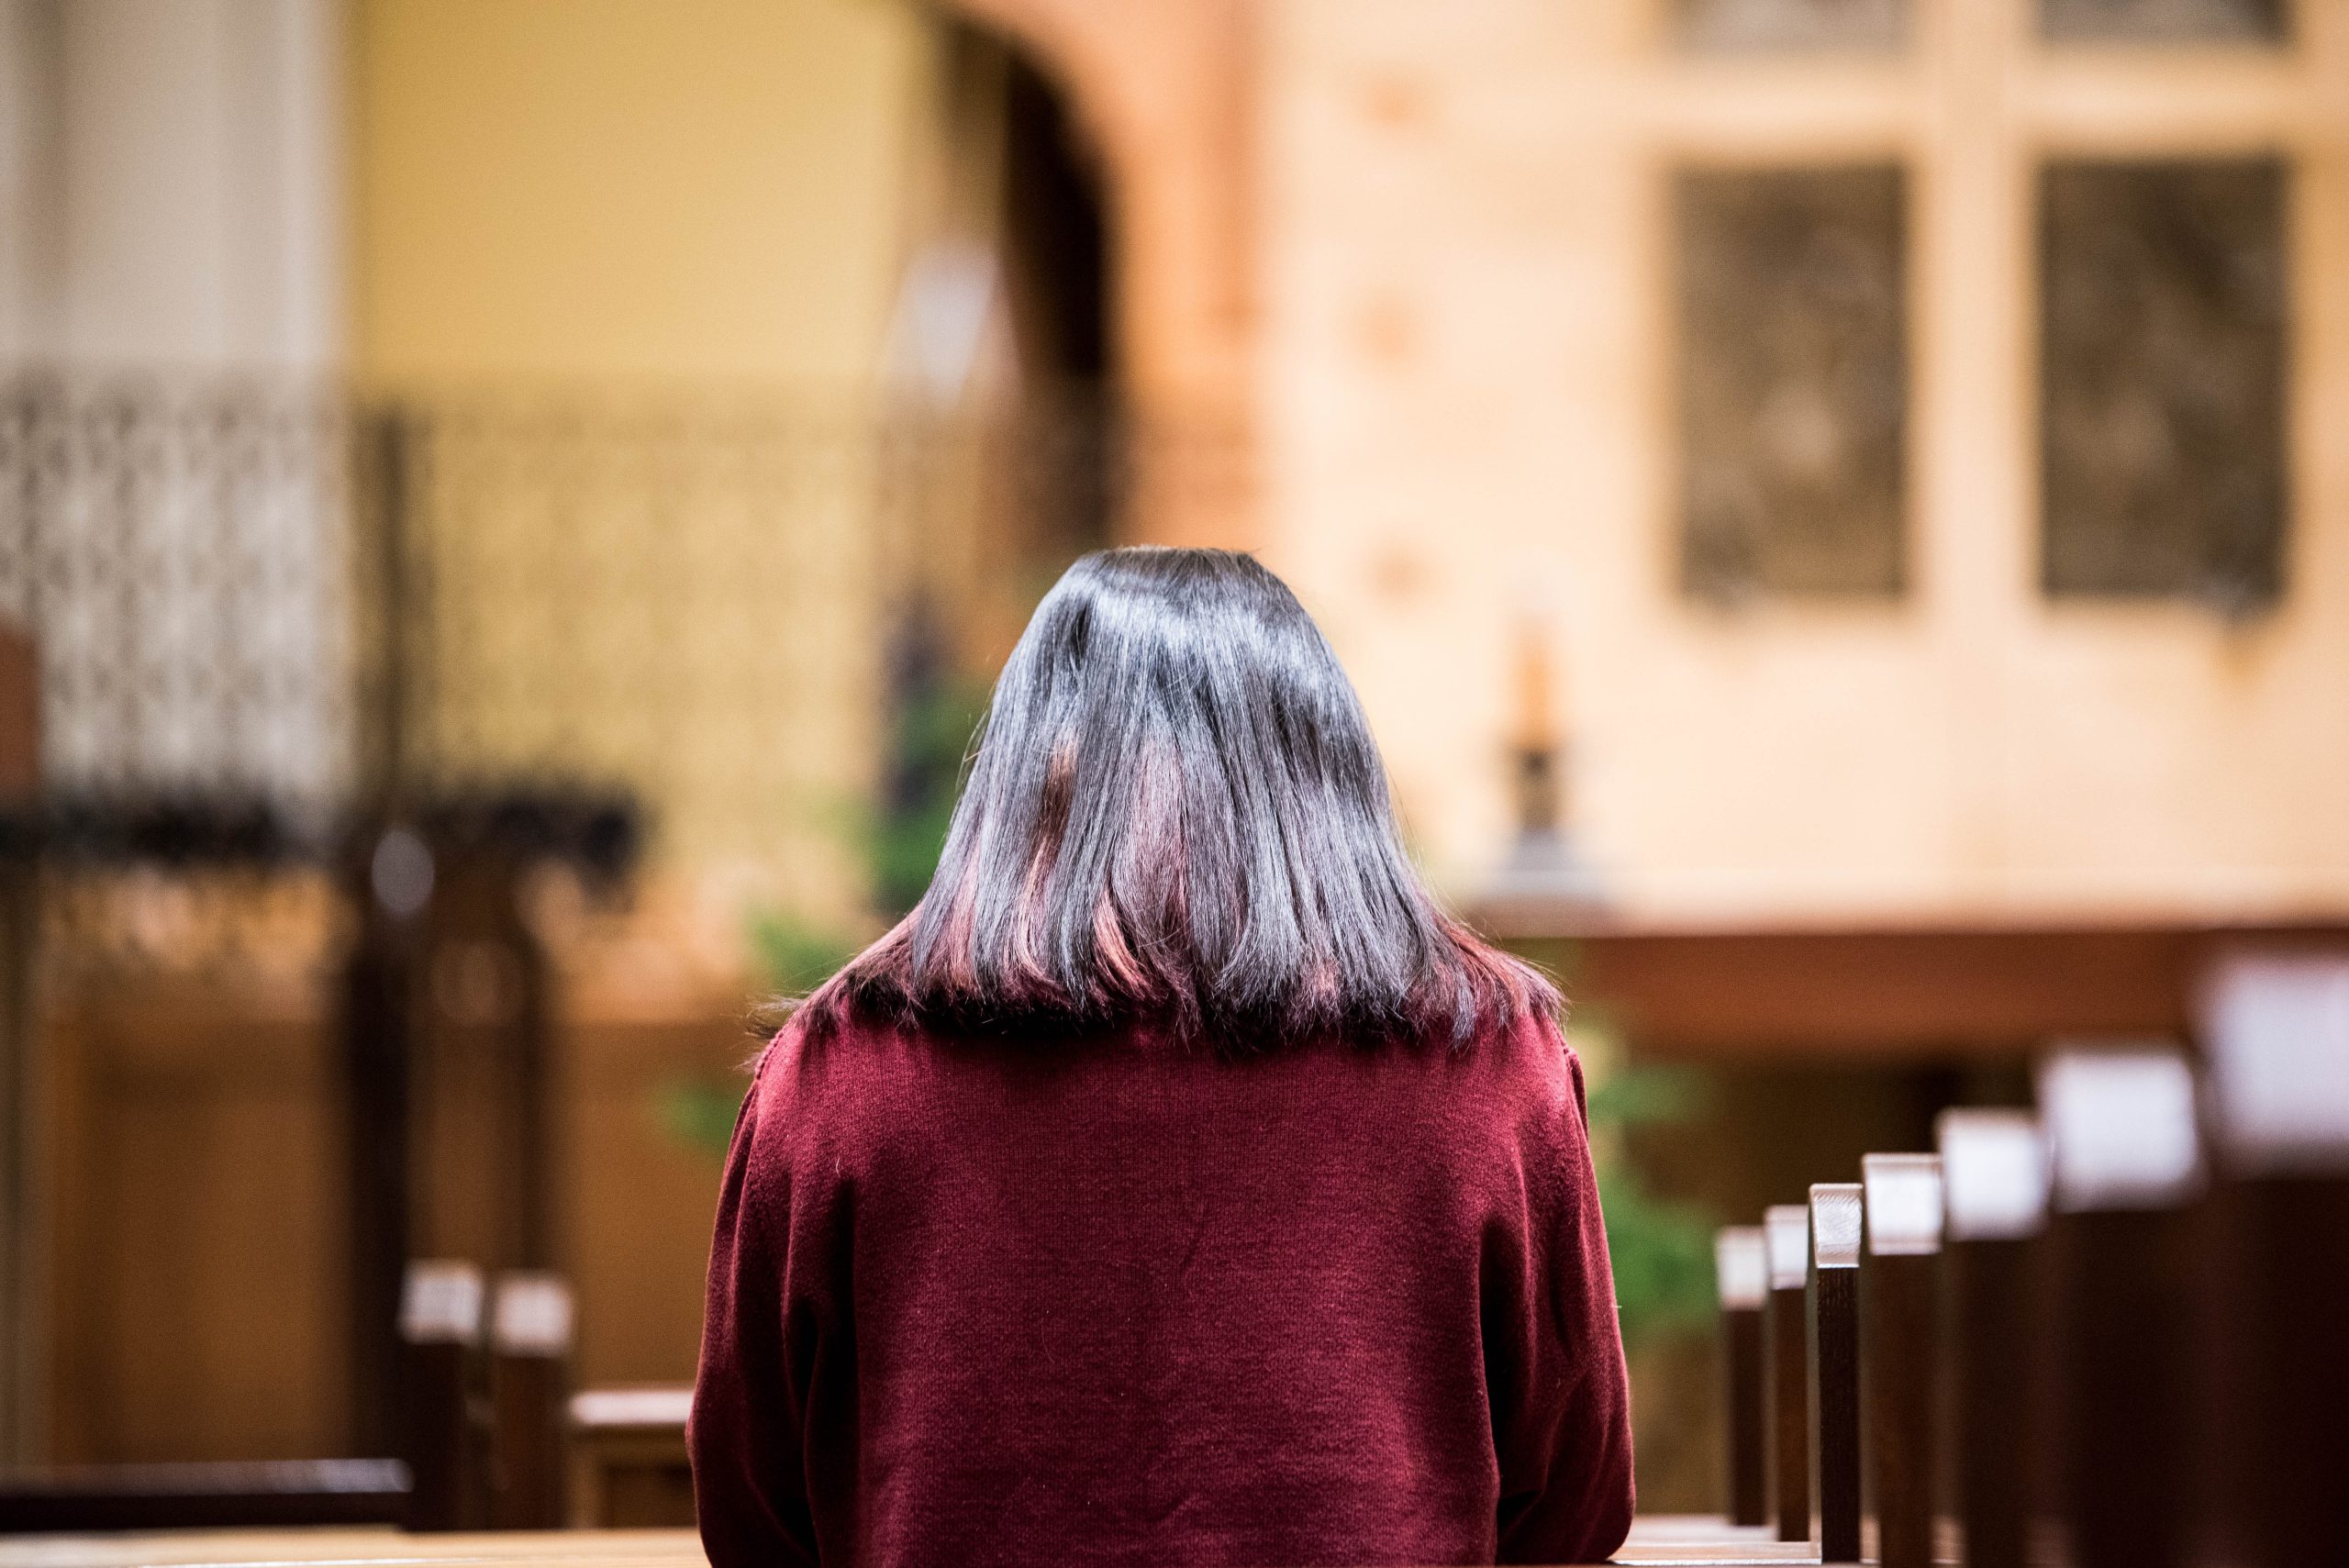 Woman praying in church | Photo by Gianna Bonello on Unsplash